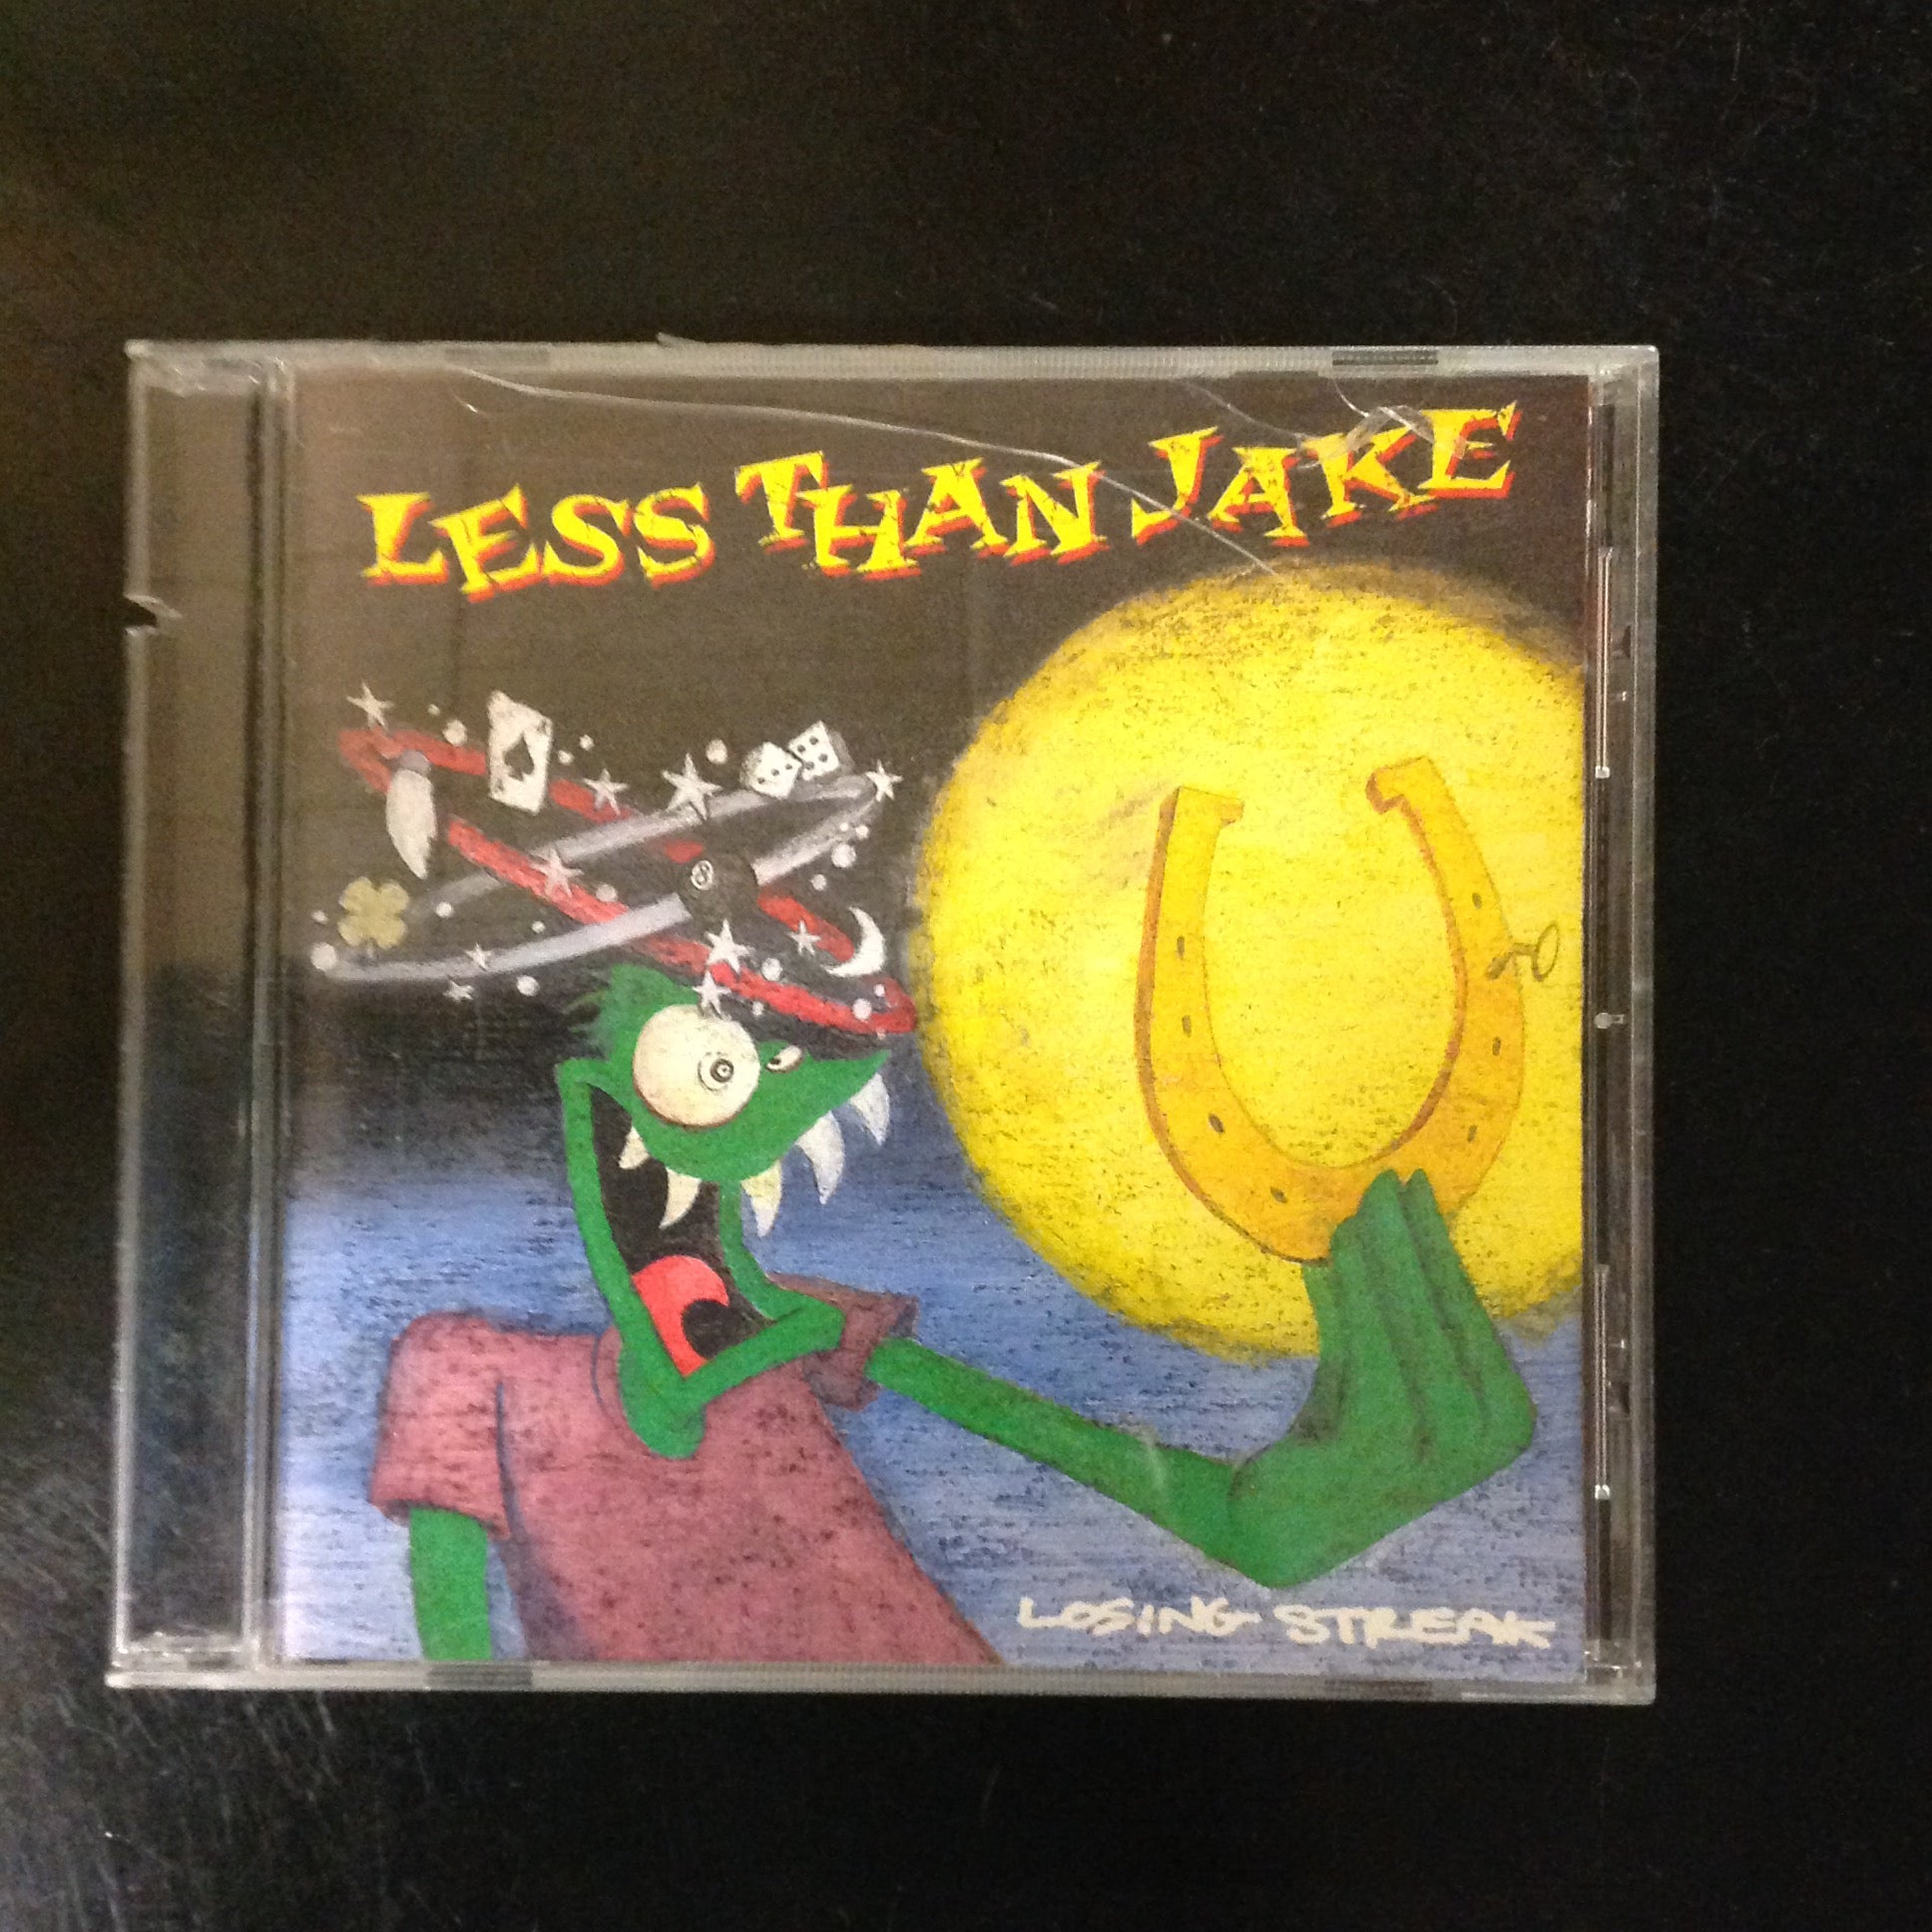 CD Less Than Jake Losing Streak CDP 7243 8 37235 2 2